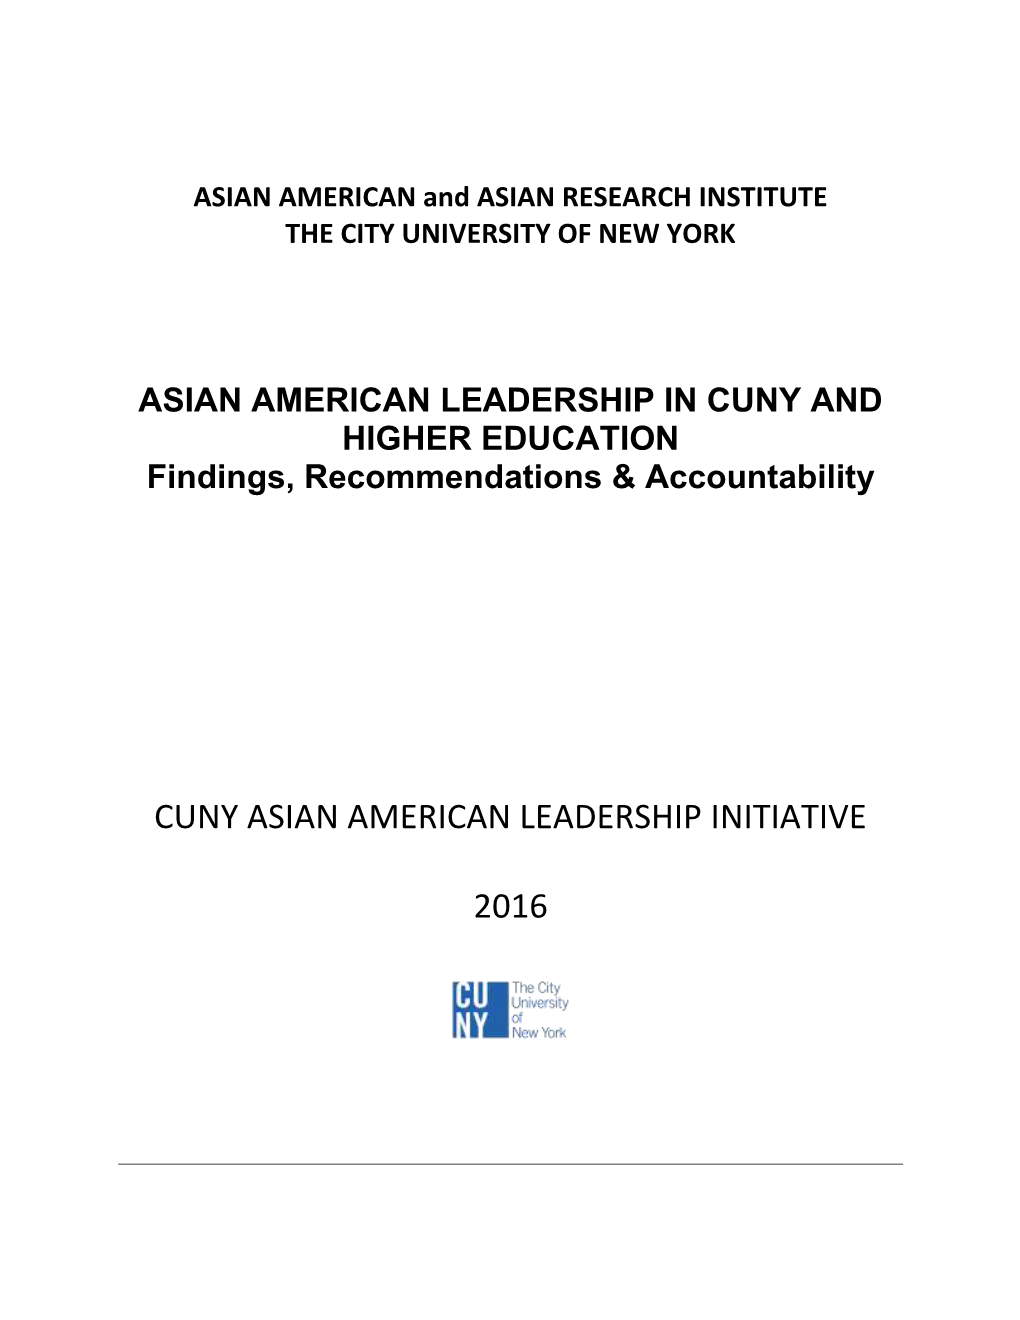 Cuny Asian American Leadership Initiative 2016